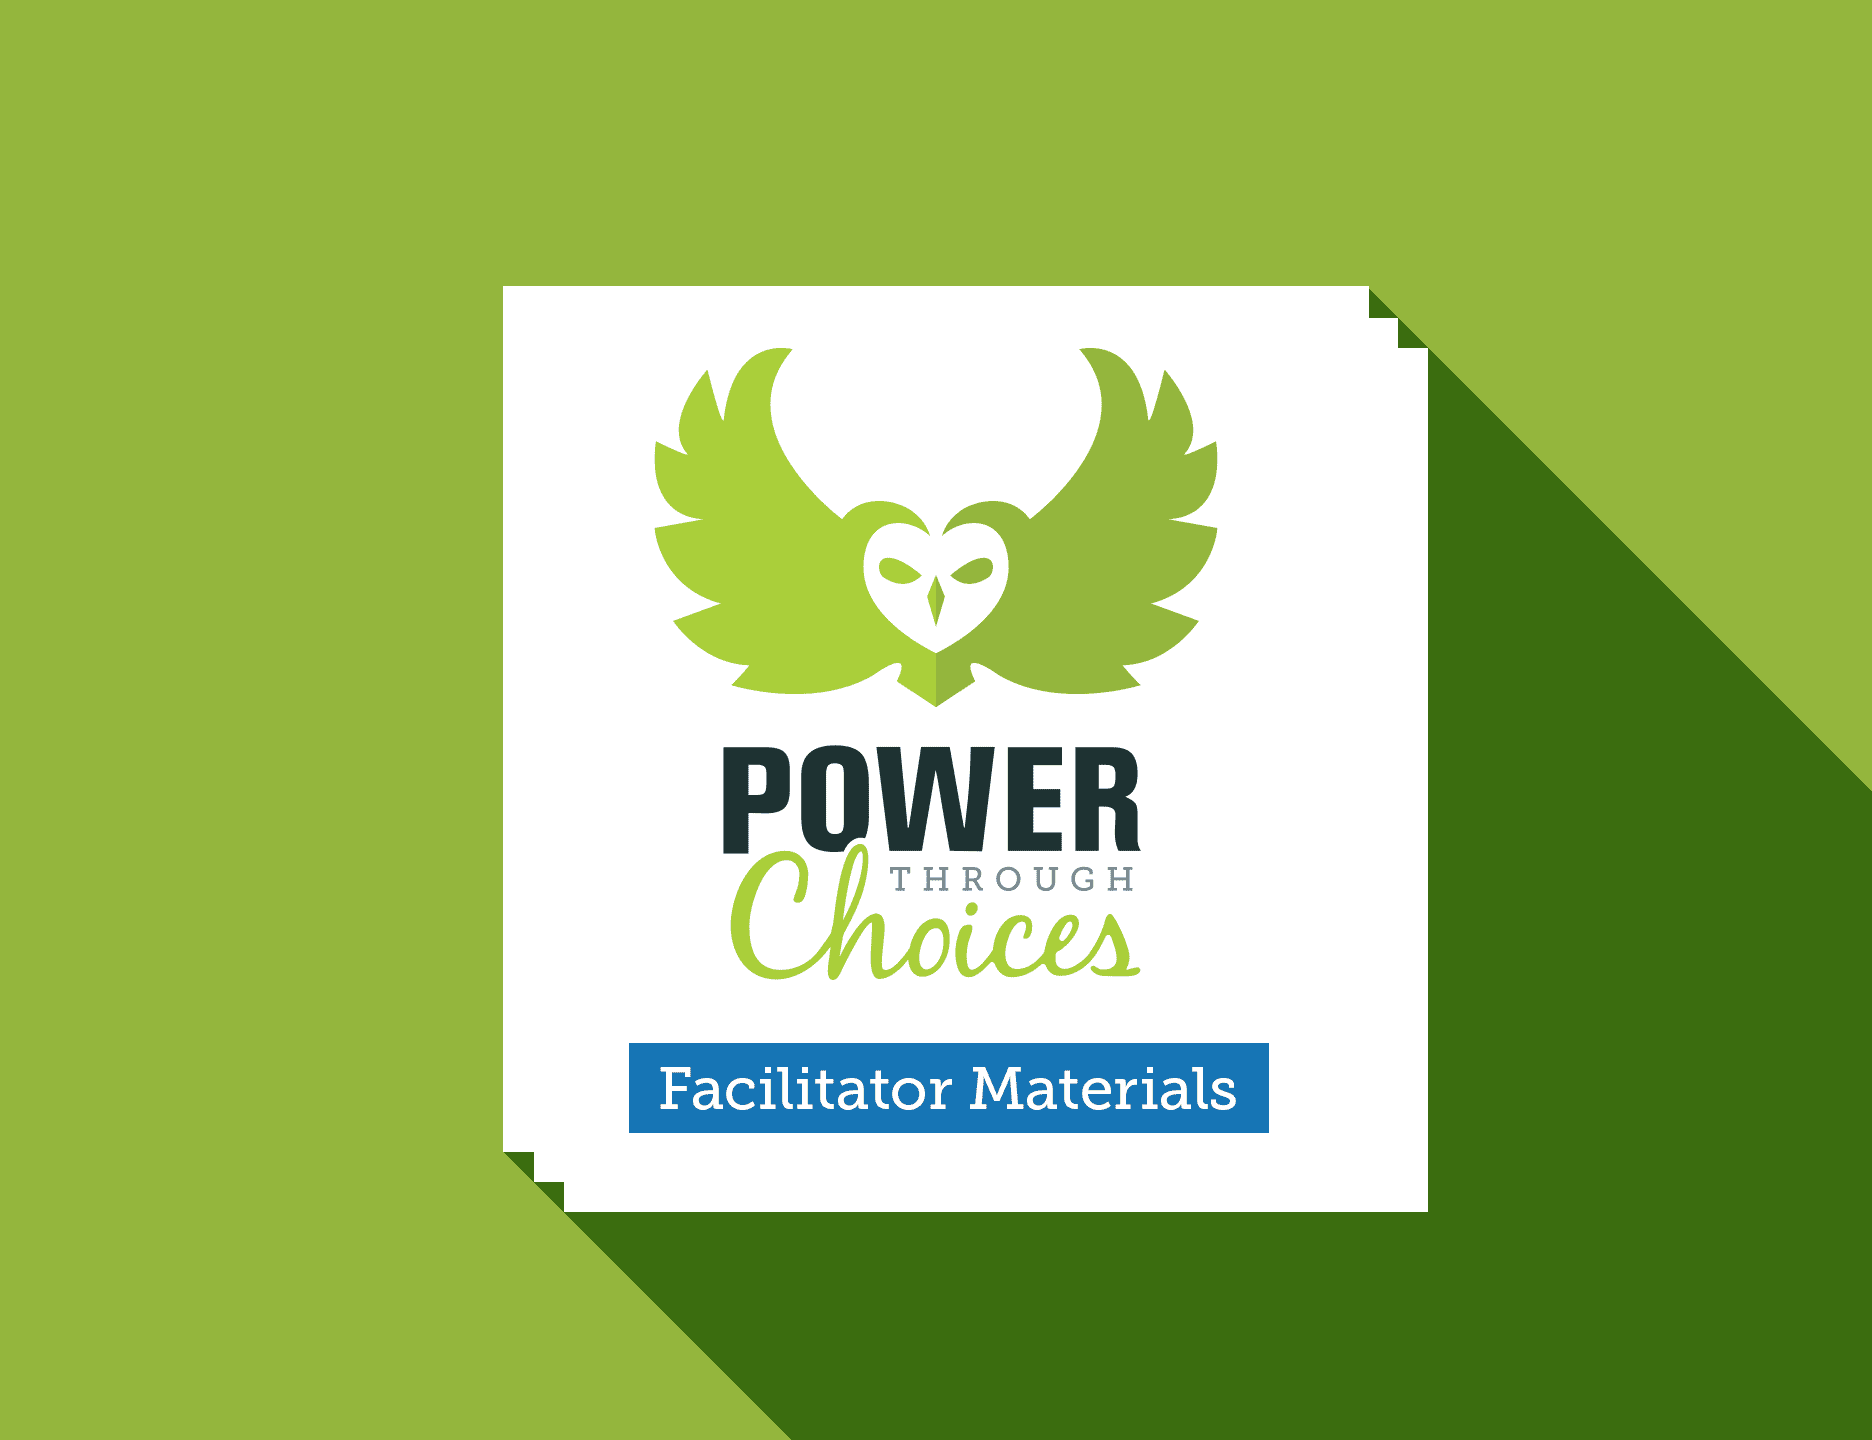 Cover image for Power Through Choices facilitator materials with owl logo